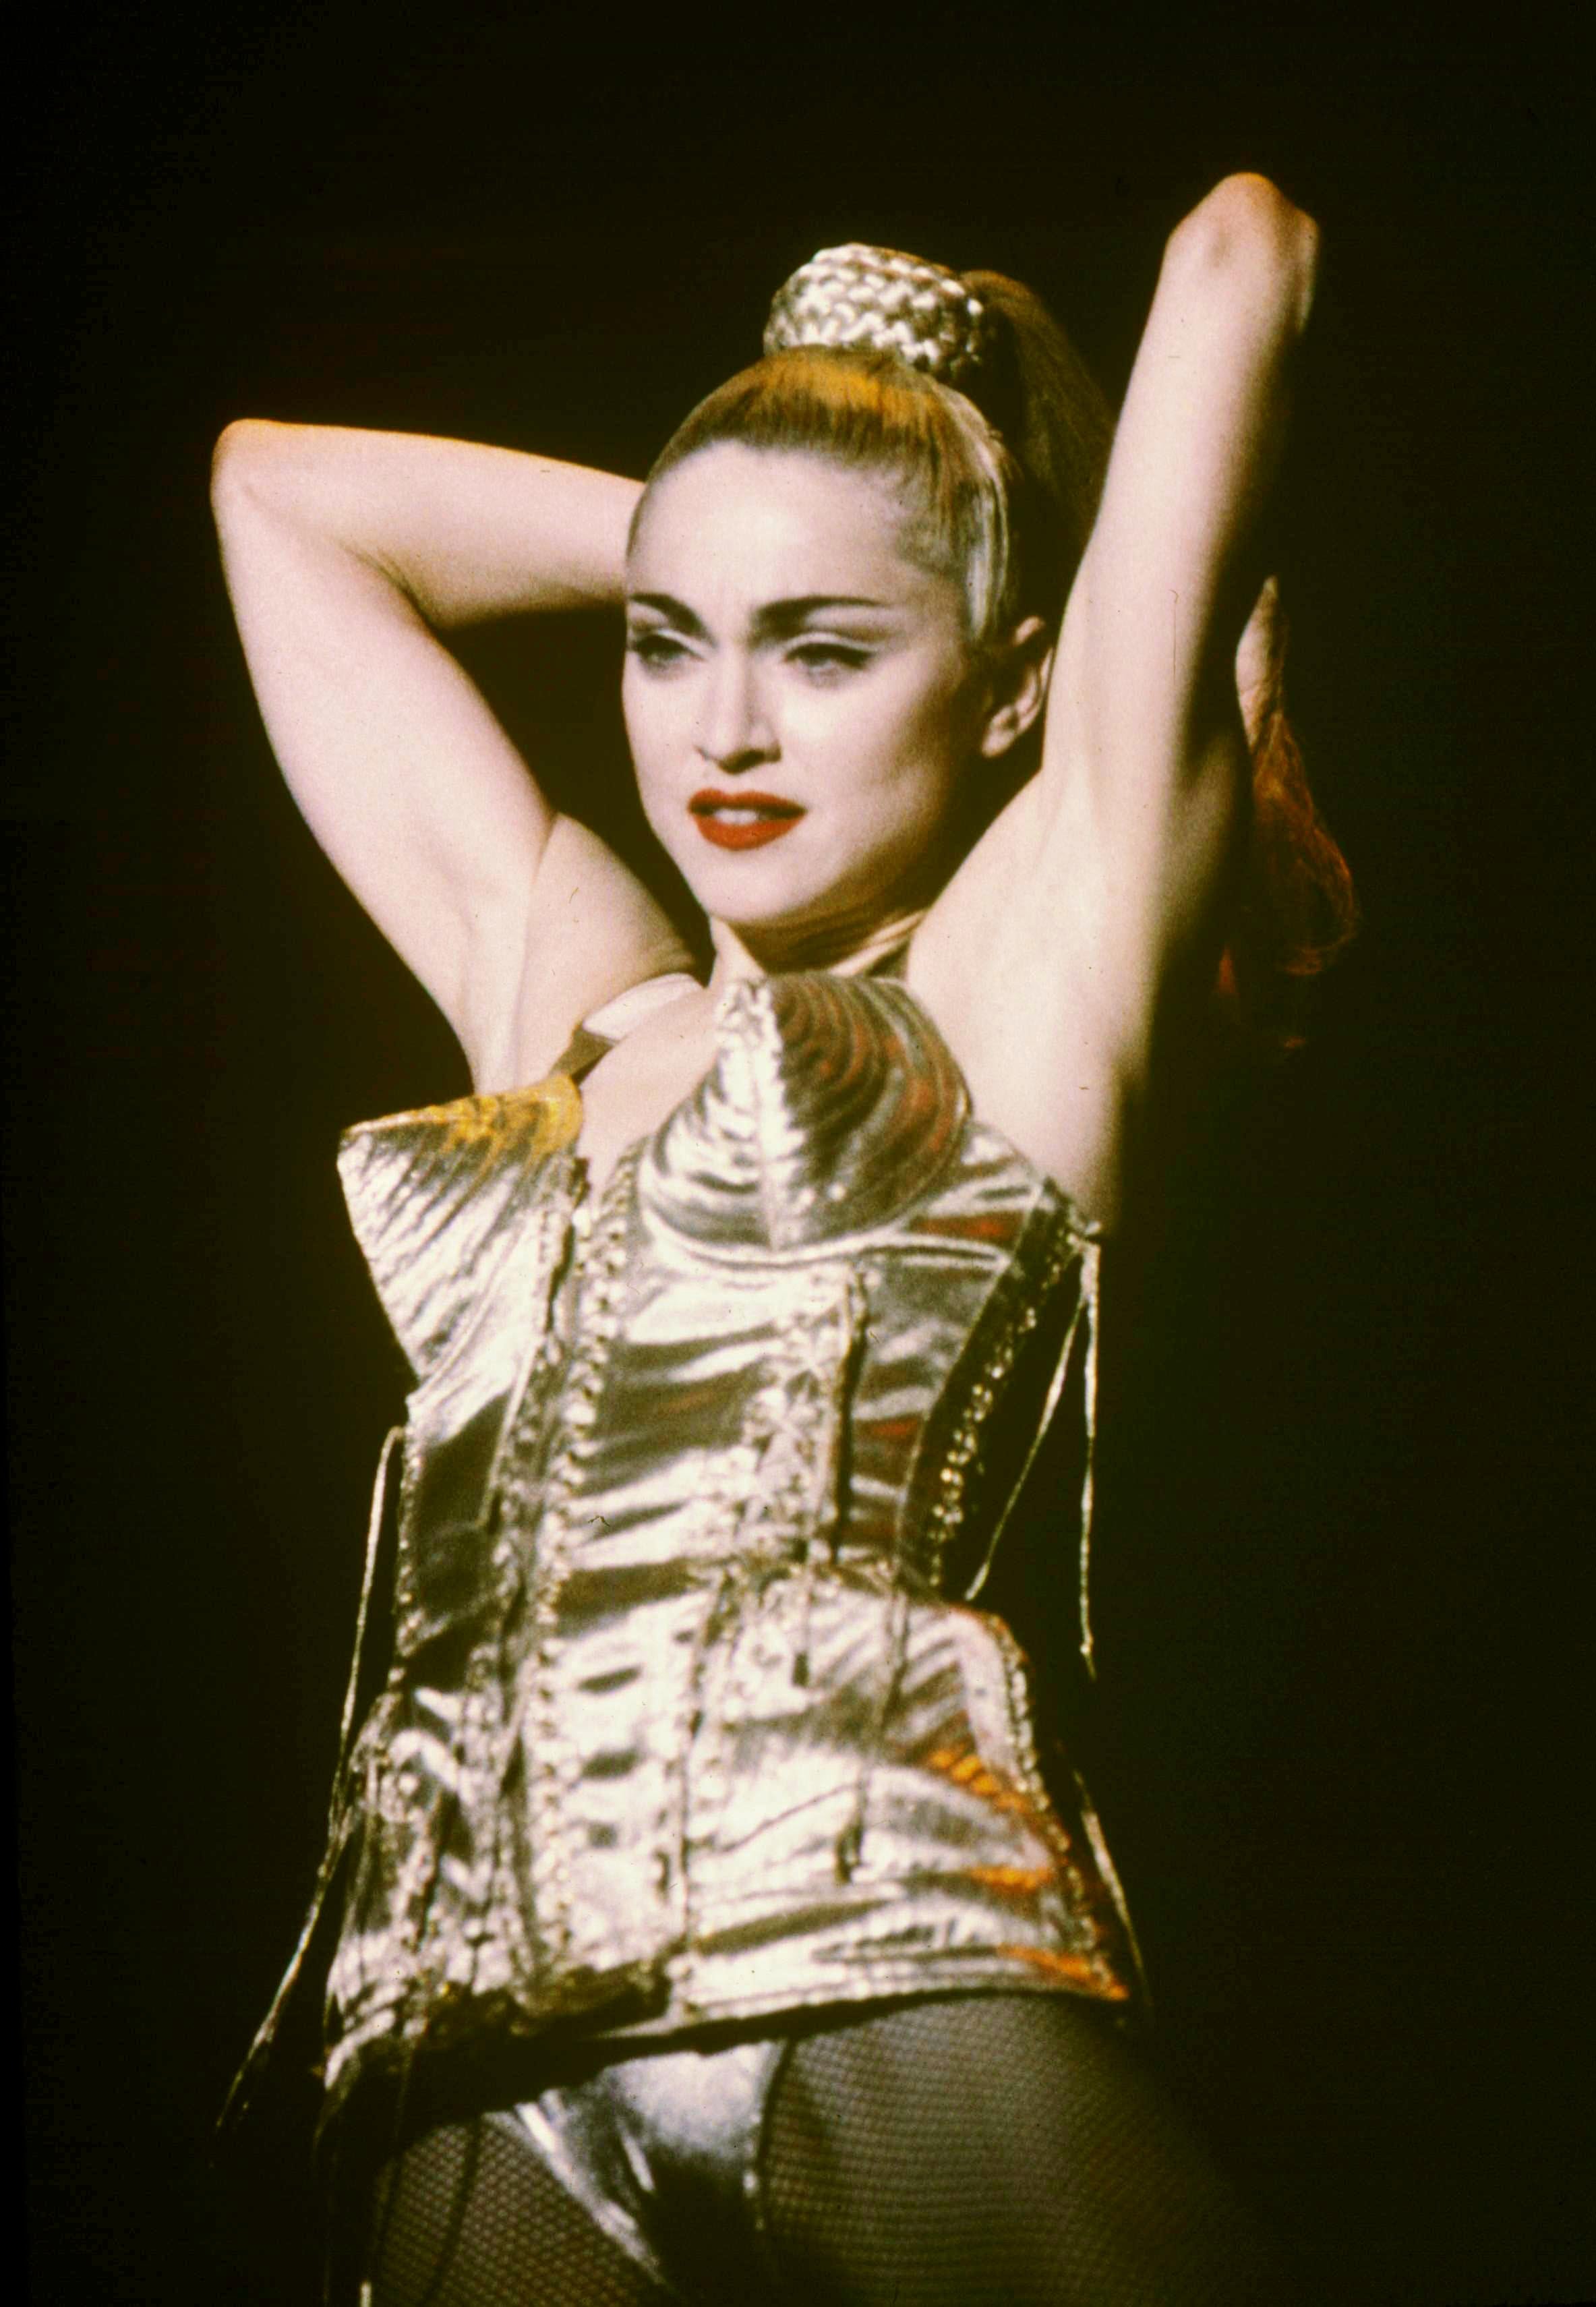 Madonna's famous cone-bra costume designed by Jean-Paul Gaultier